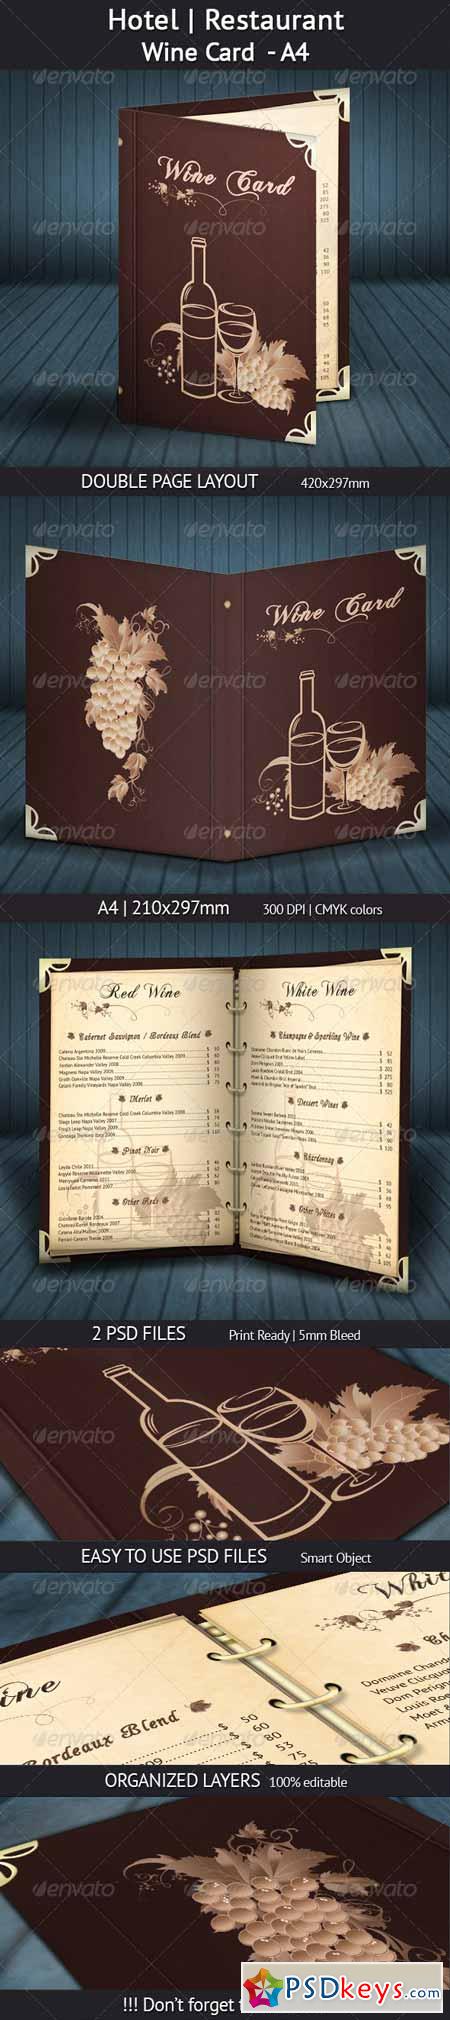 Hotel Restaurant Wine Card - A4 4536240